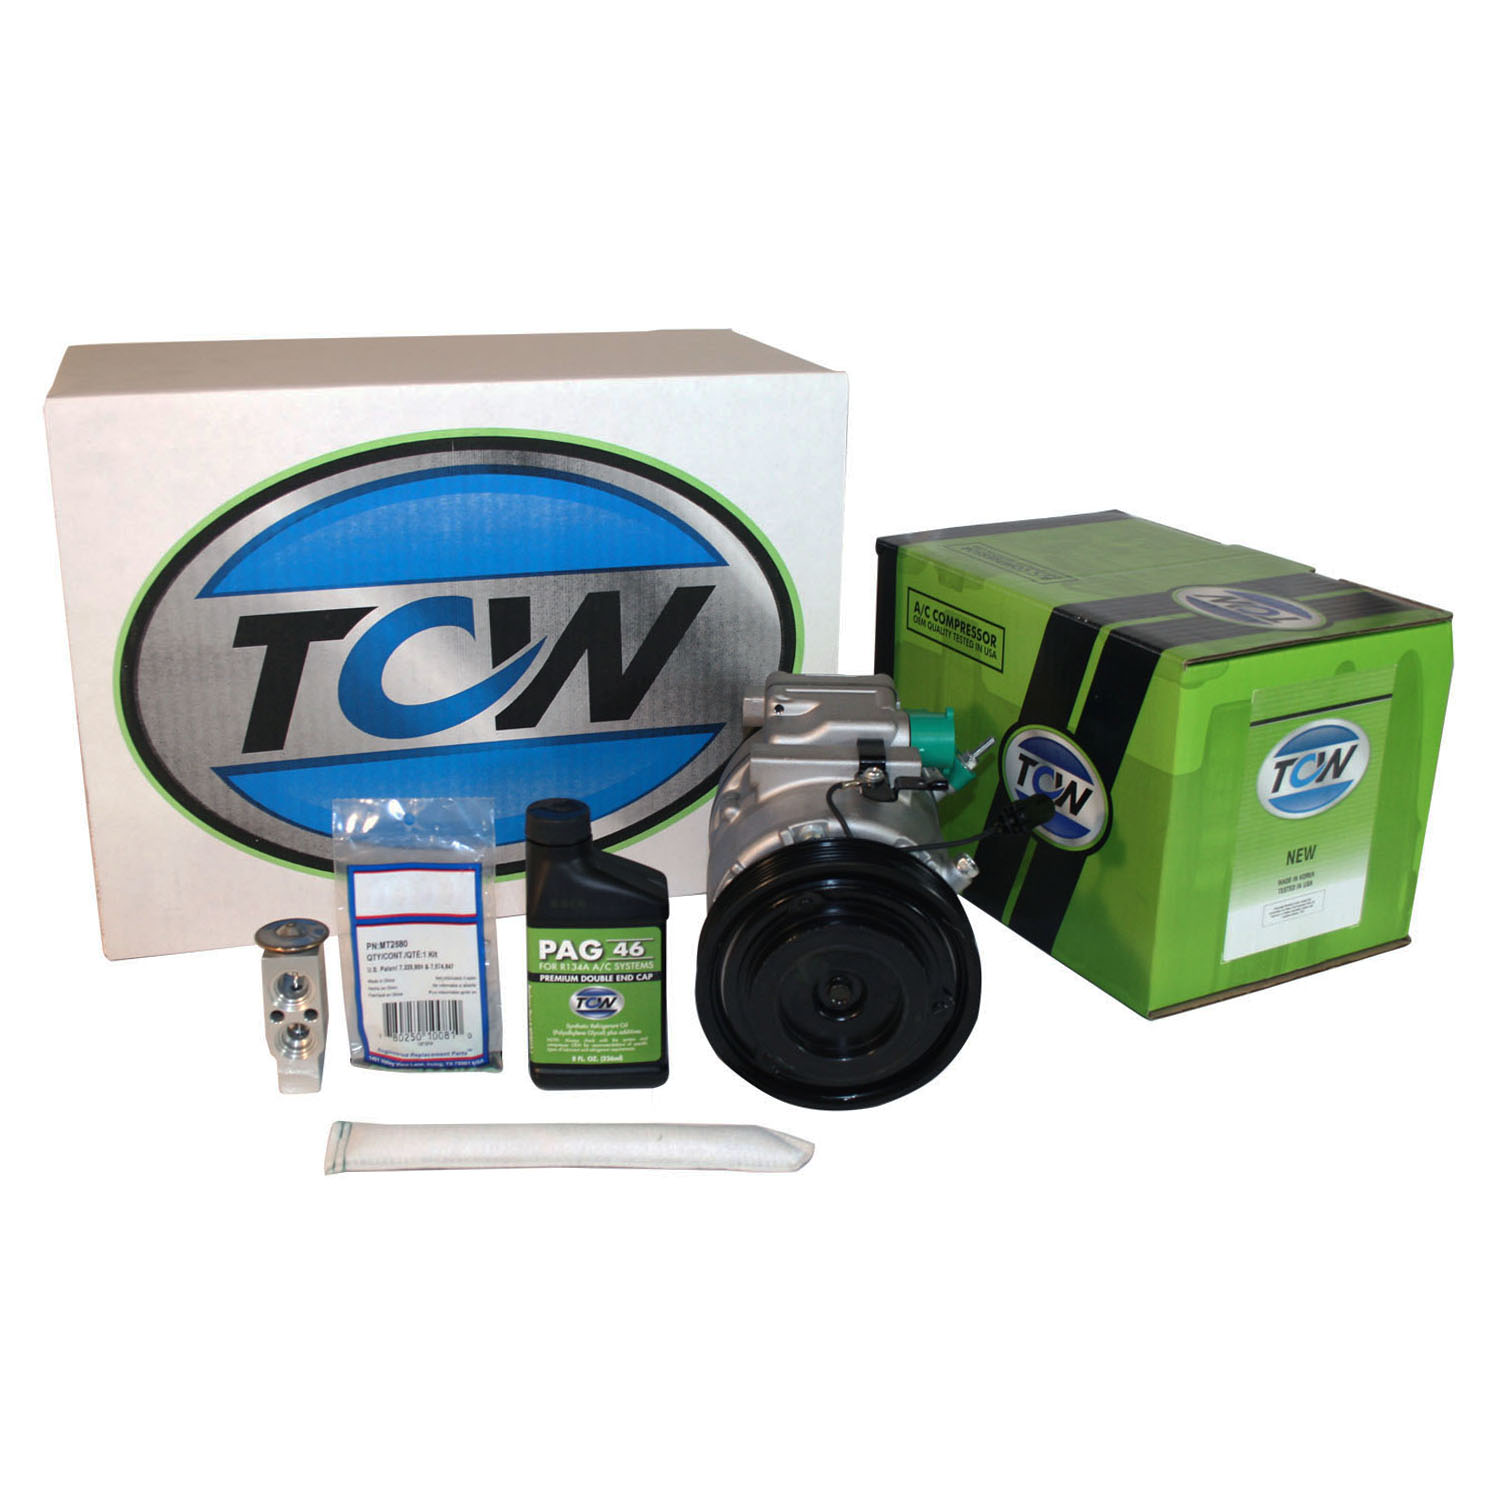 TCW Vehicle A/C Kit K1000379N New Product Image field_60b6a13a6e67c